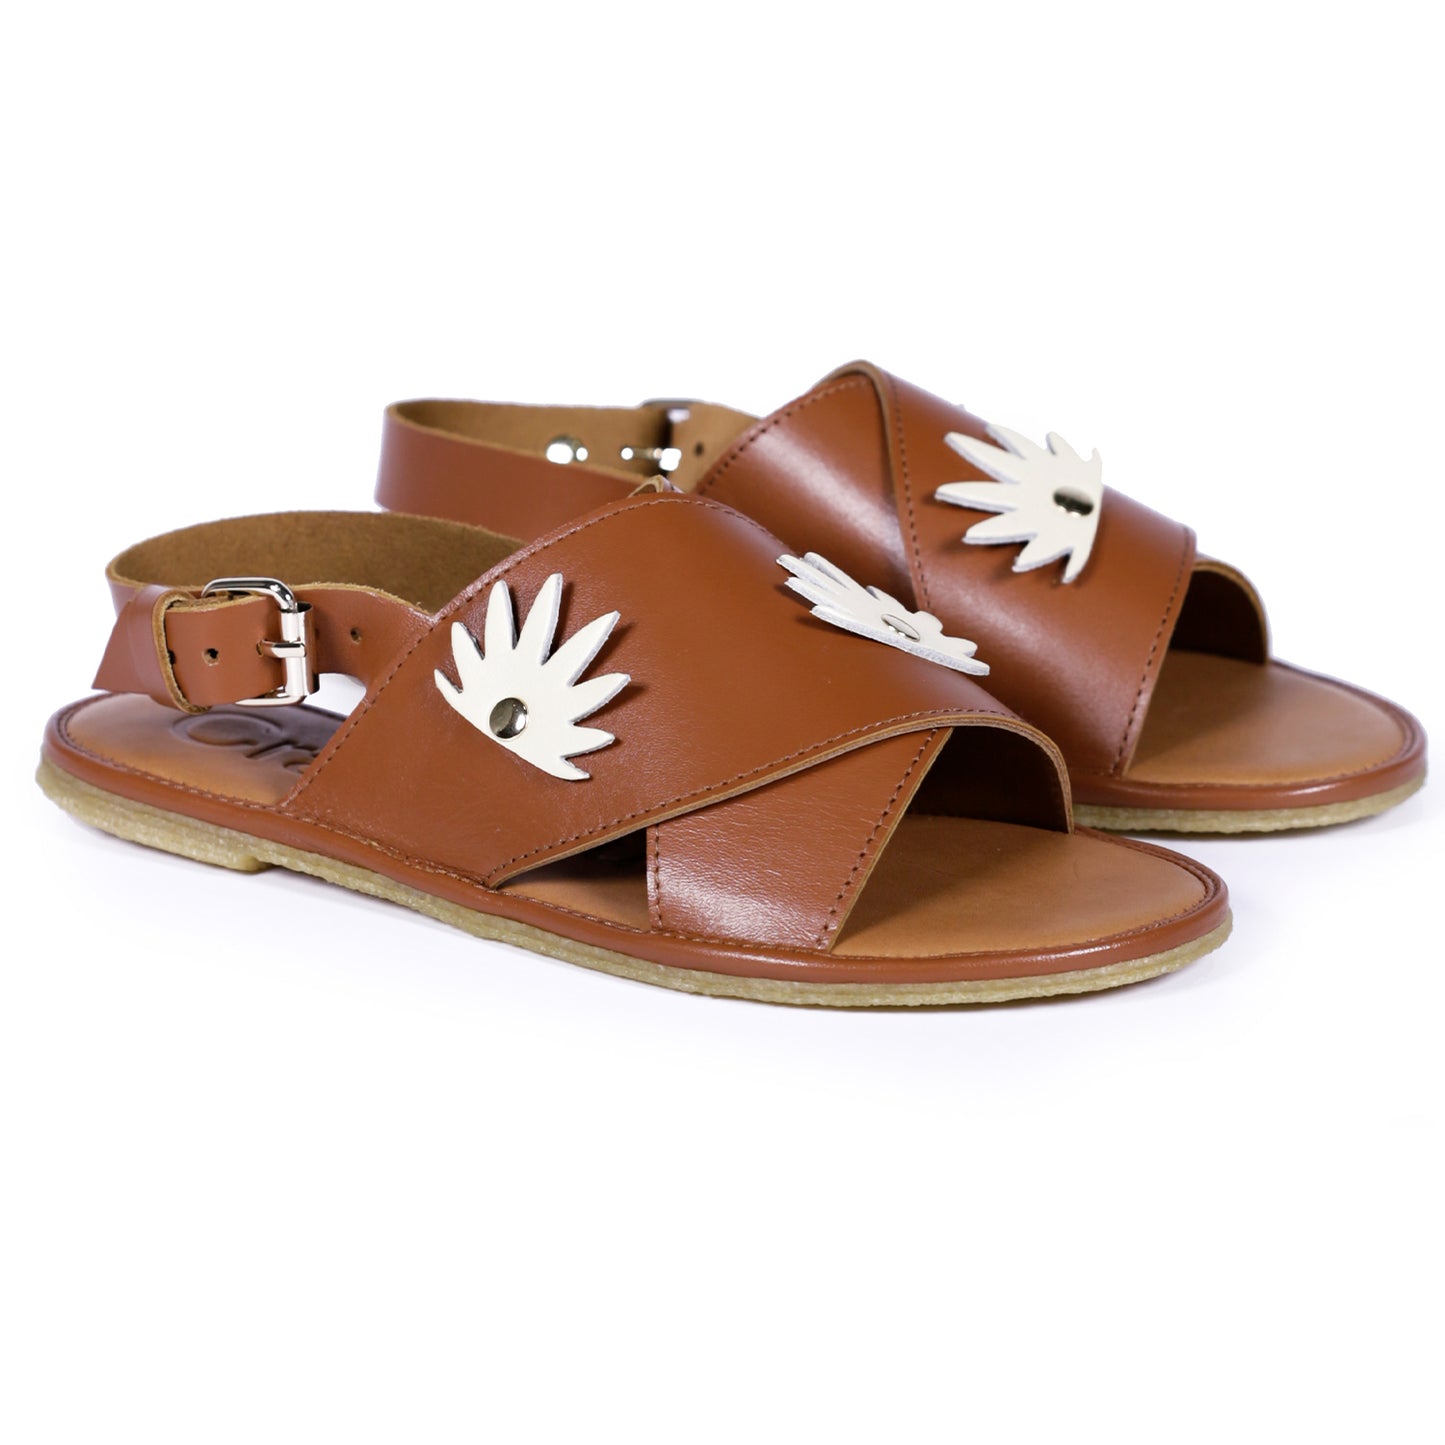 Soul Tan Leaf Sandals